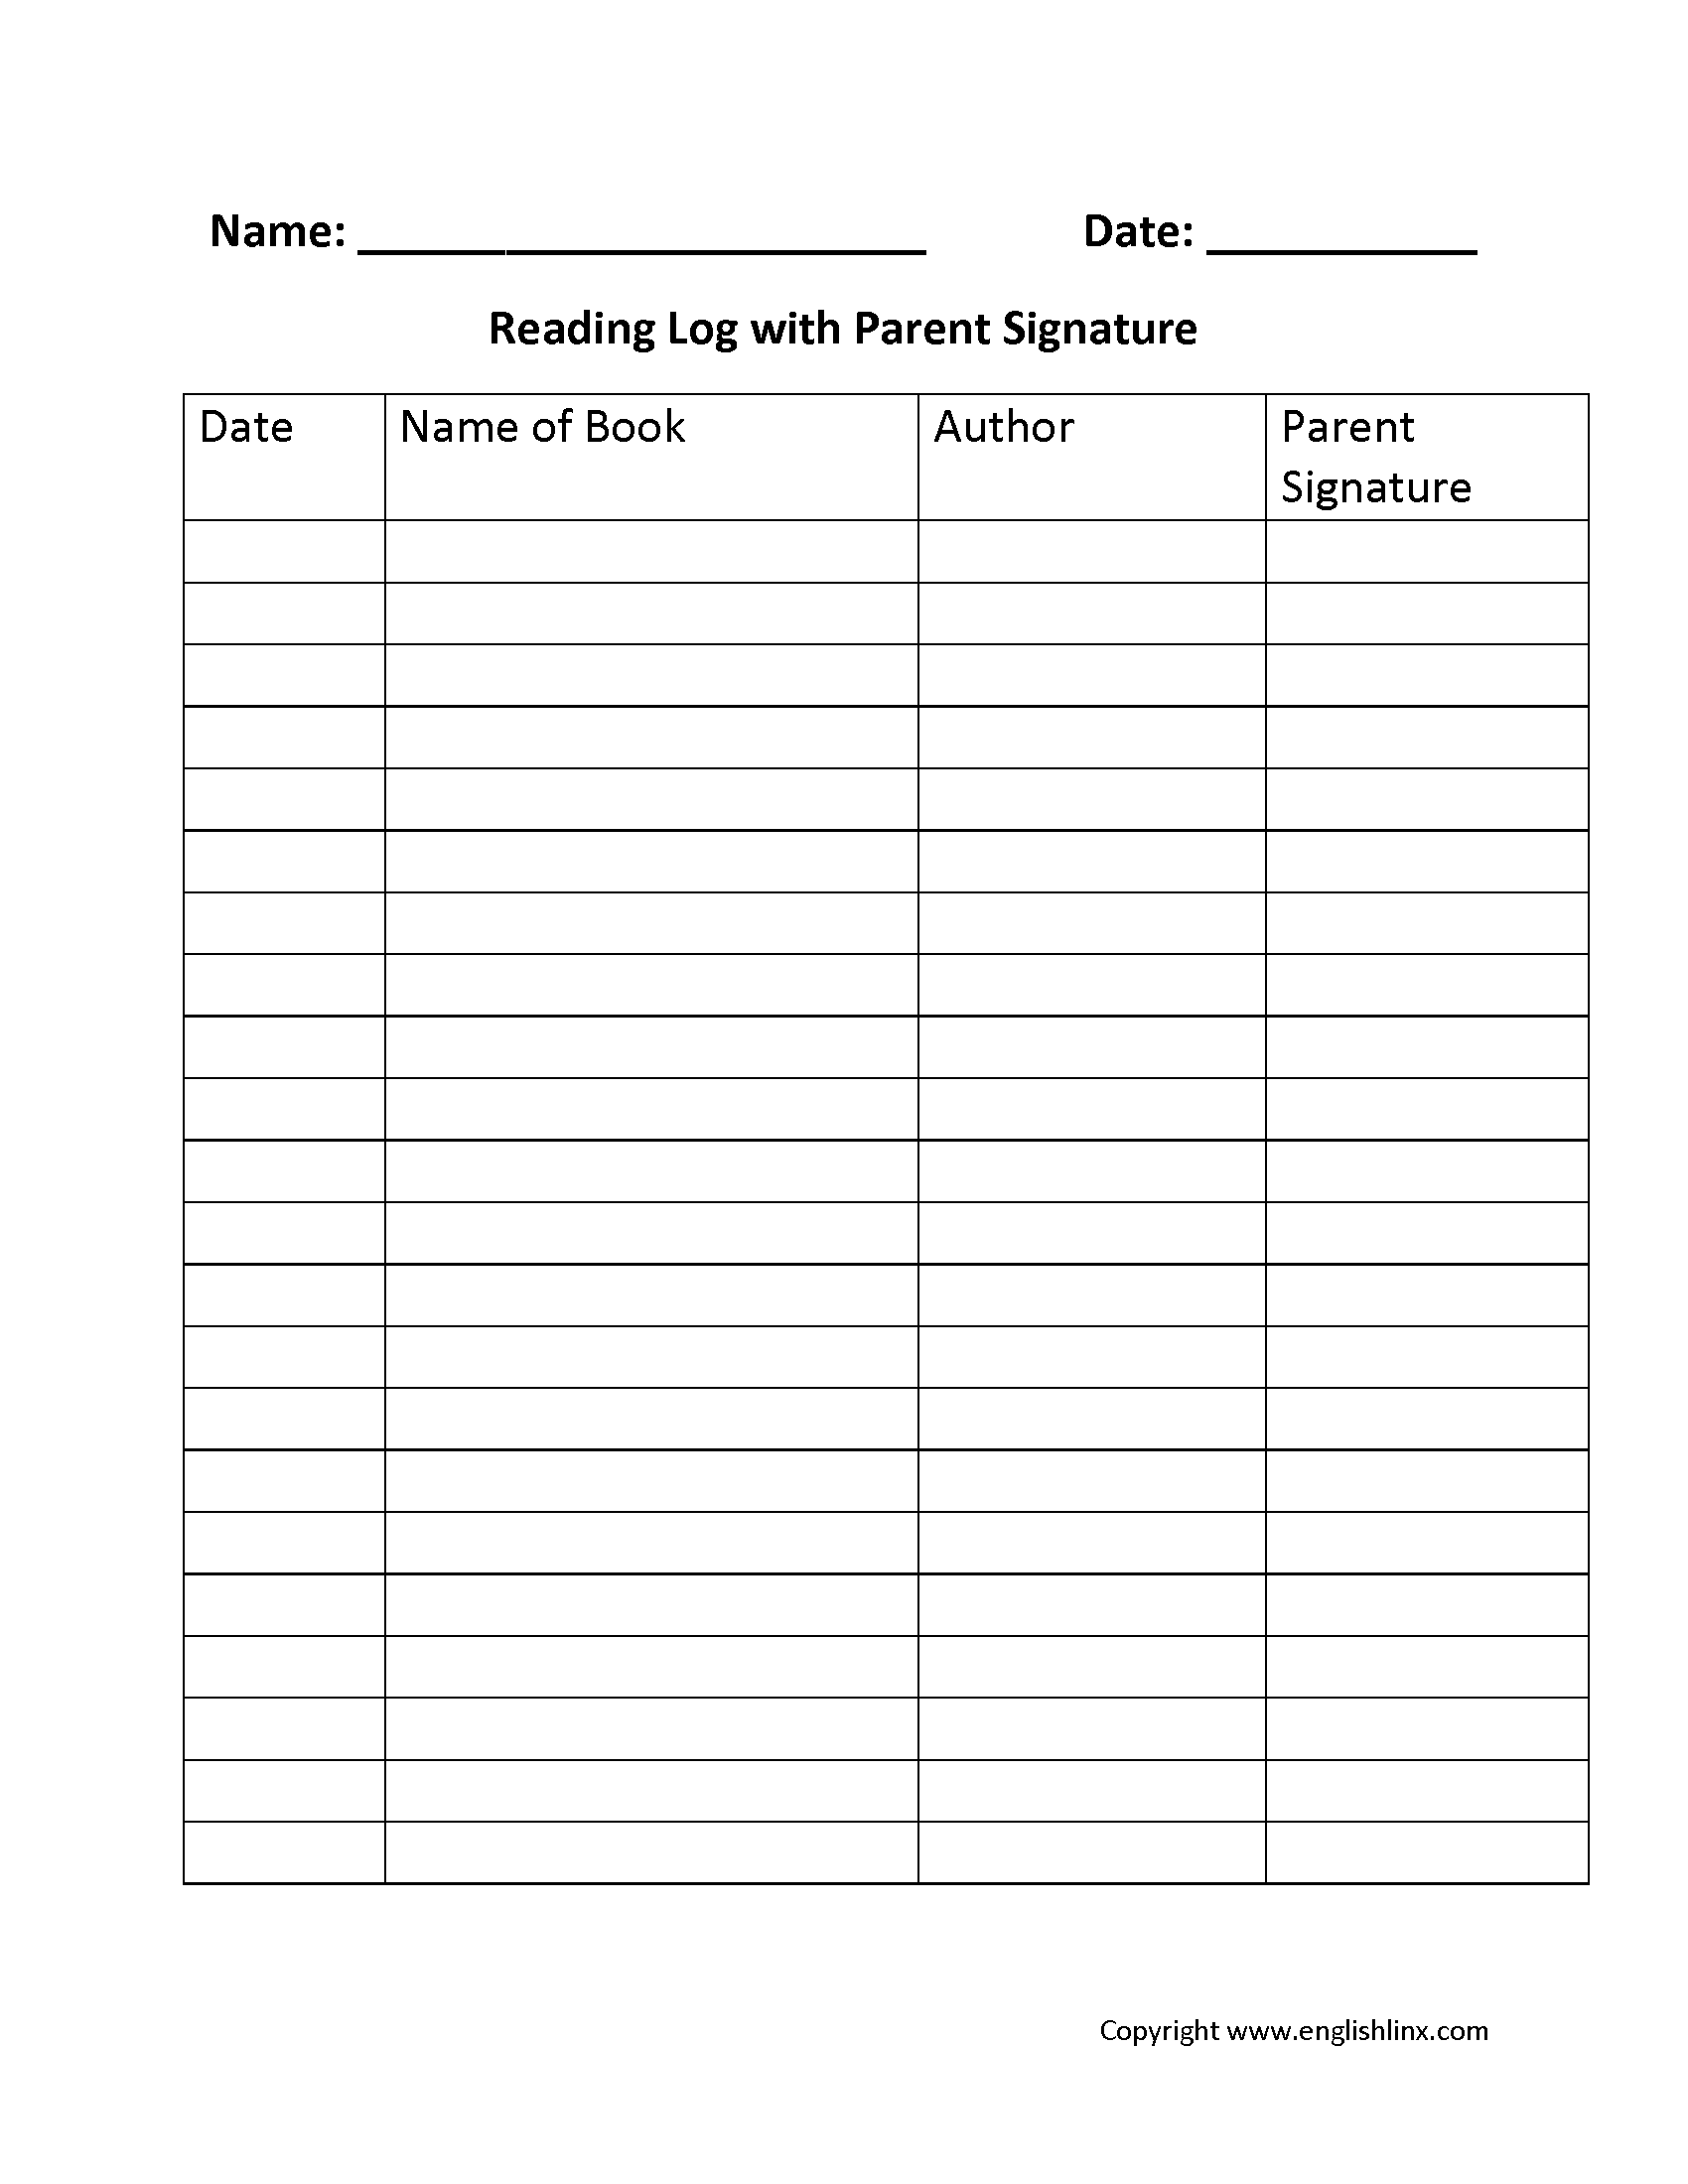 Reading Log with Parent Signature Worksheet